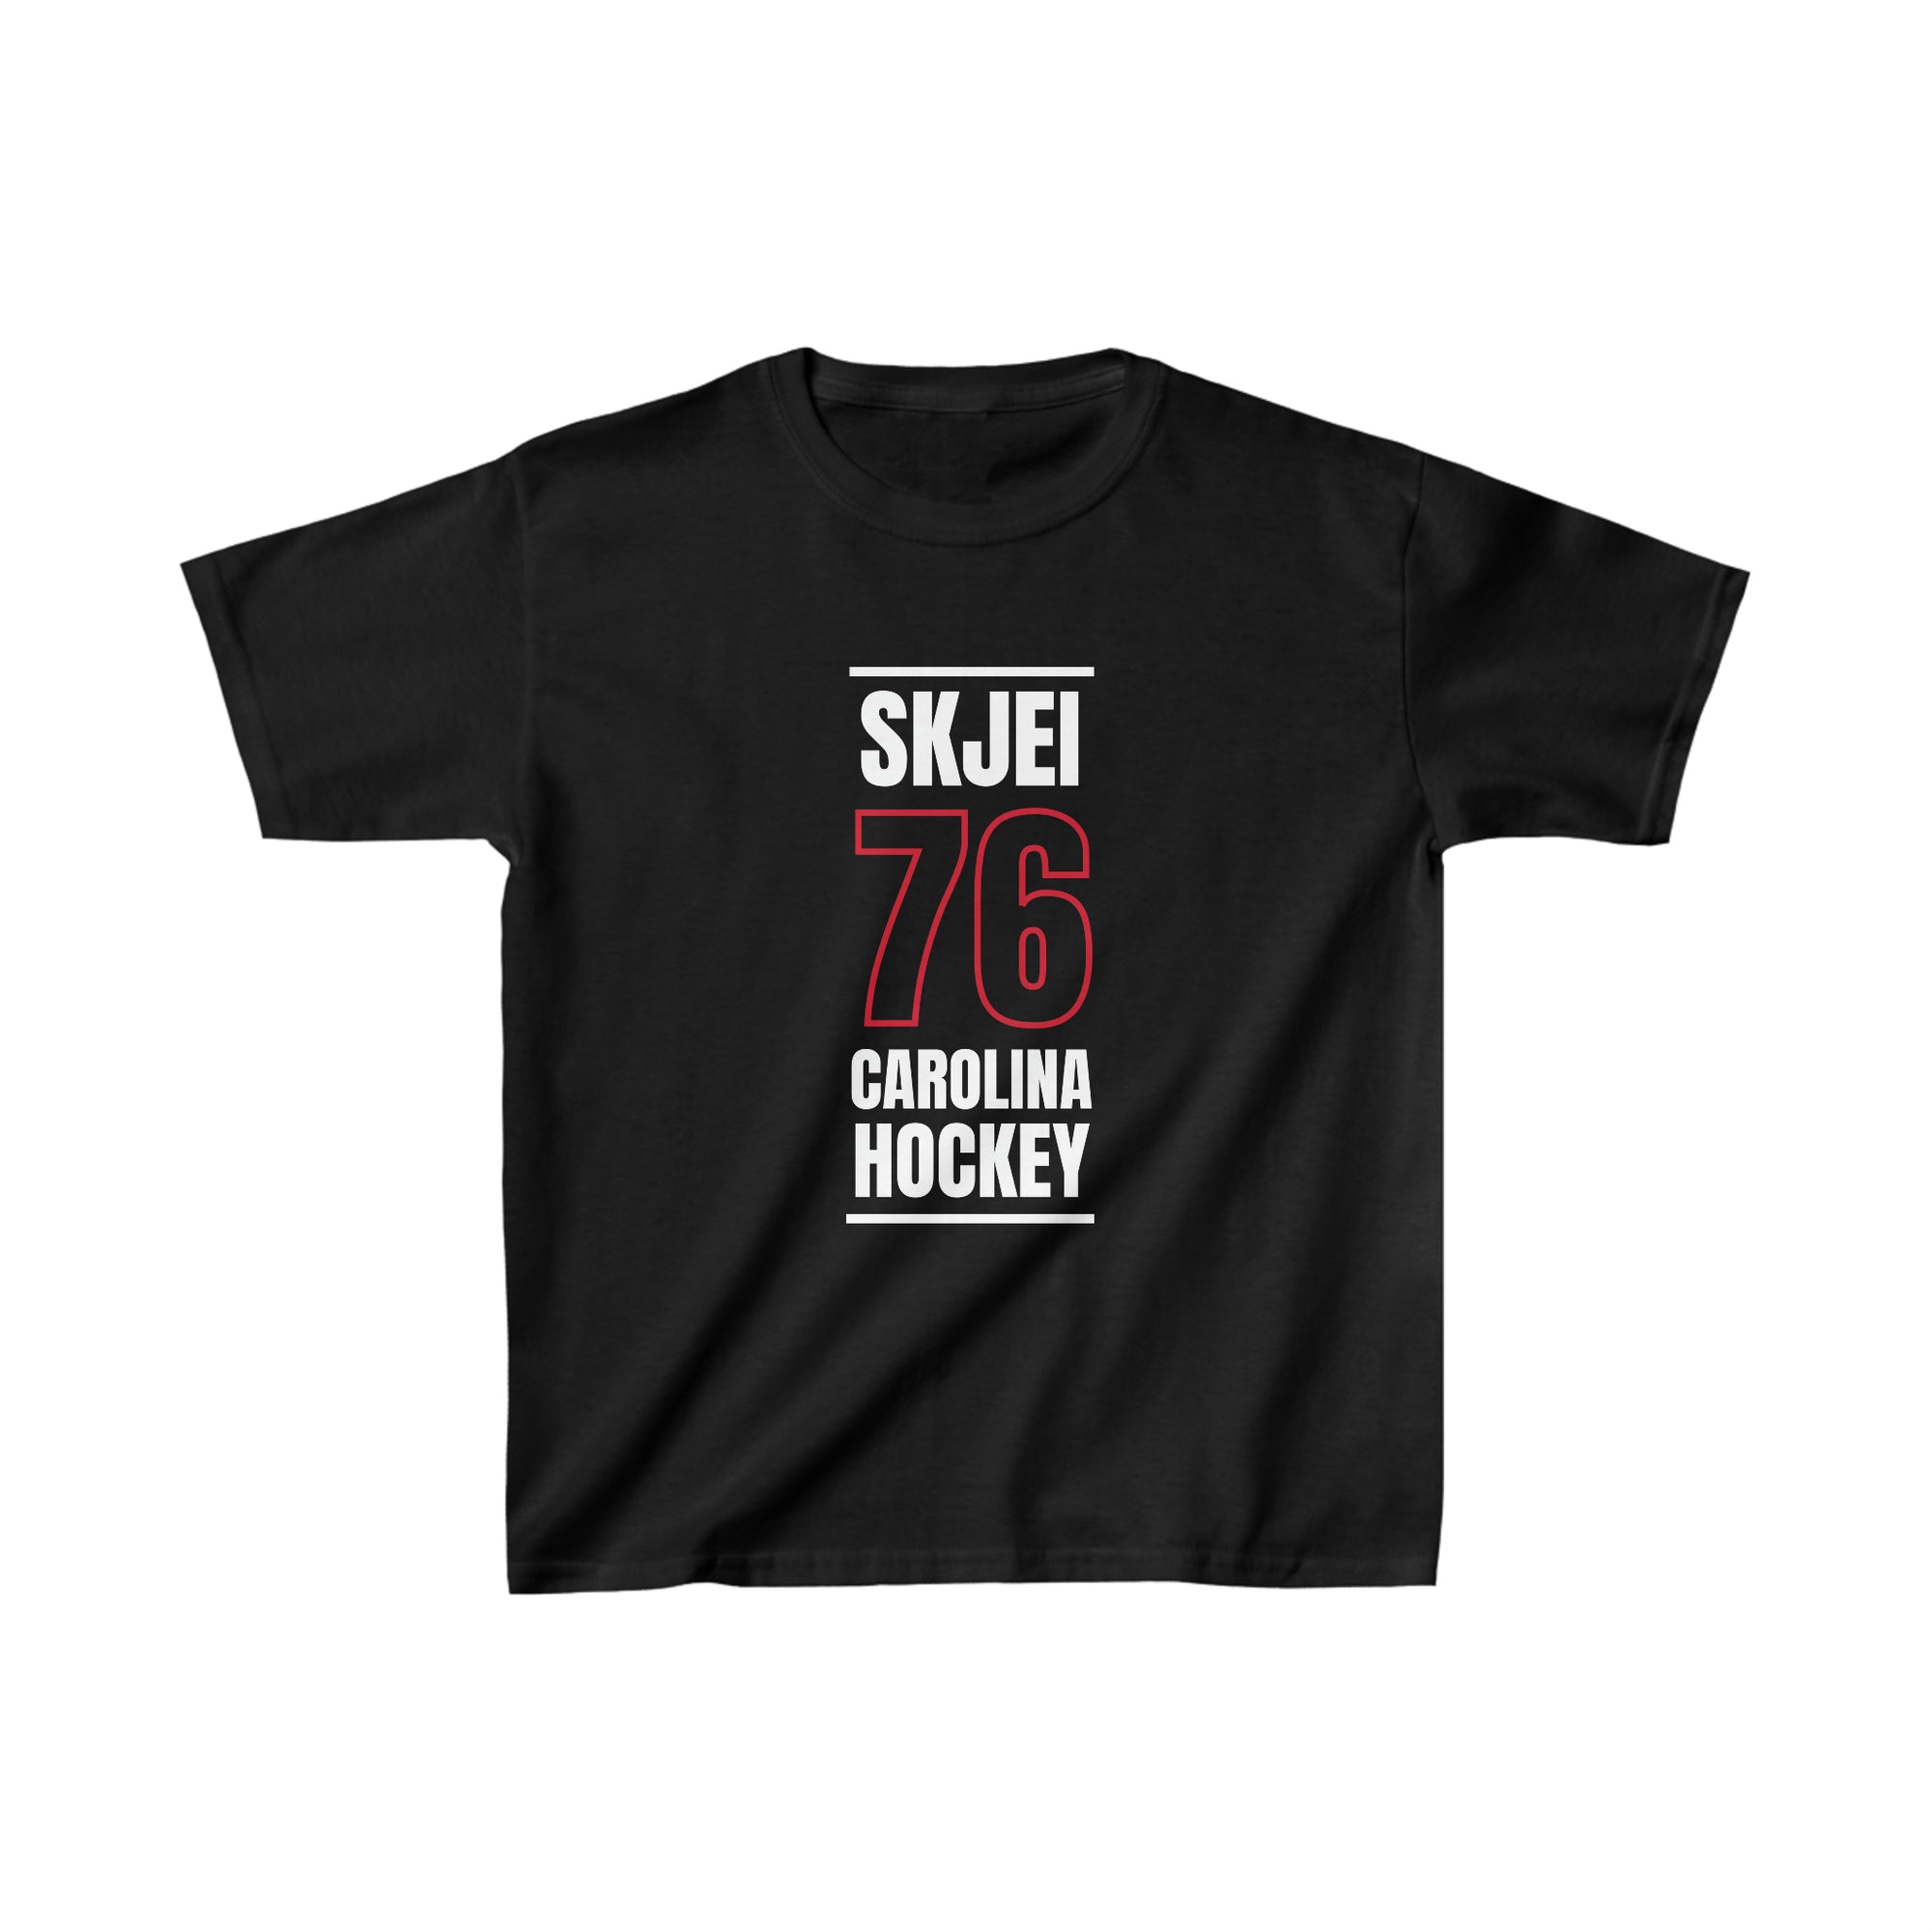 Skjei 76 Carolina Hockey Black Vertical Design Kids Tee